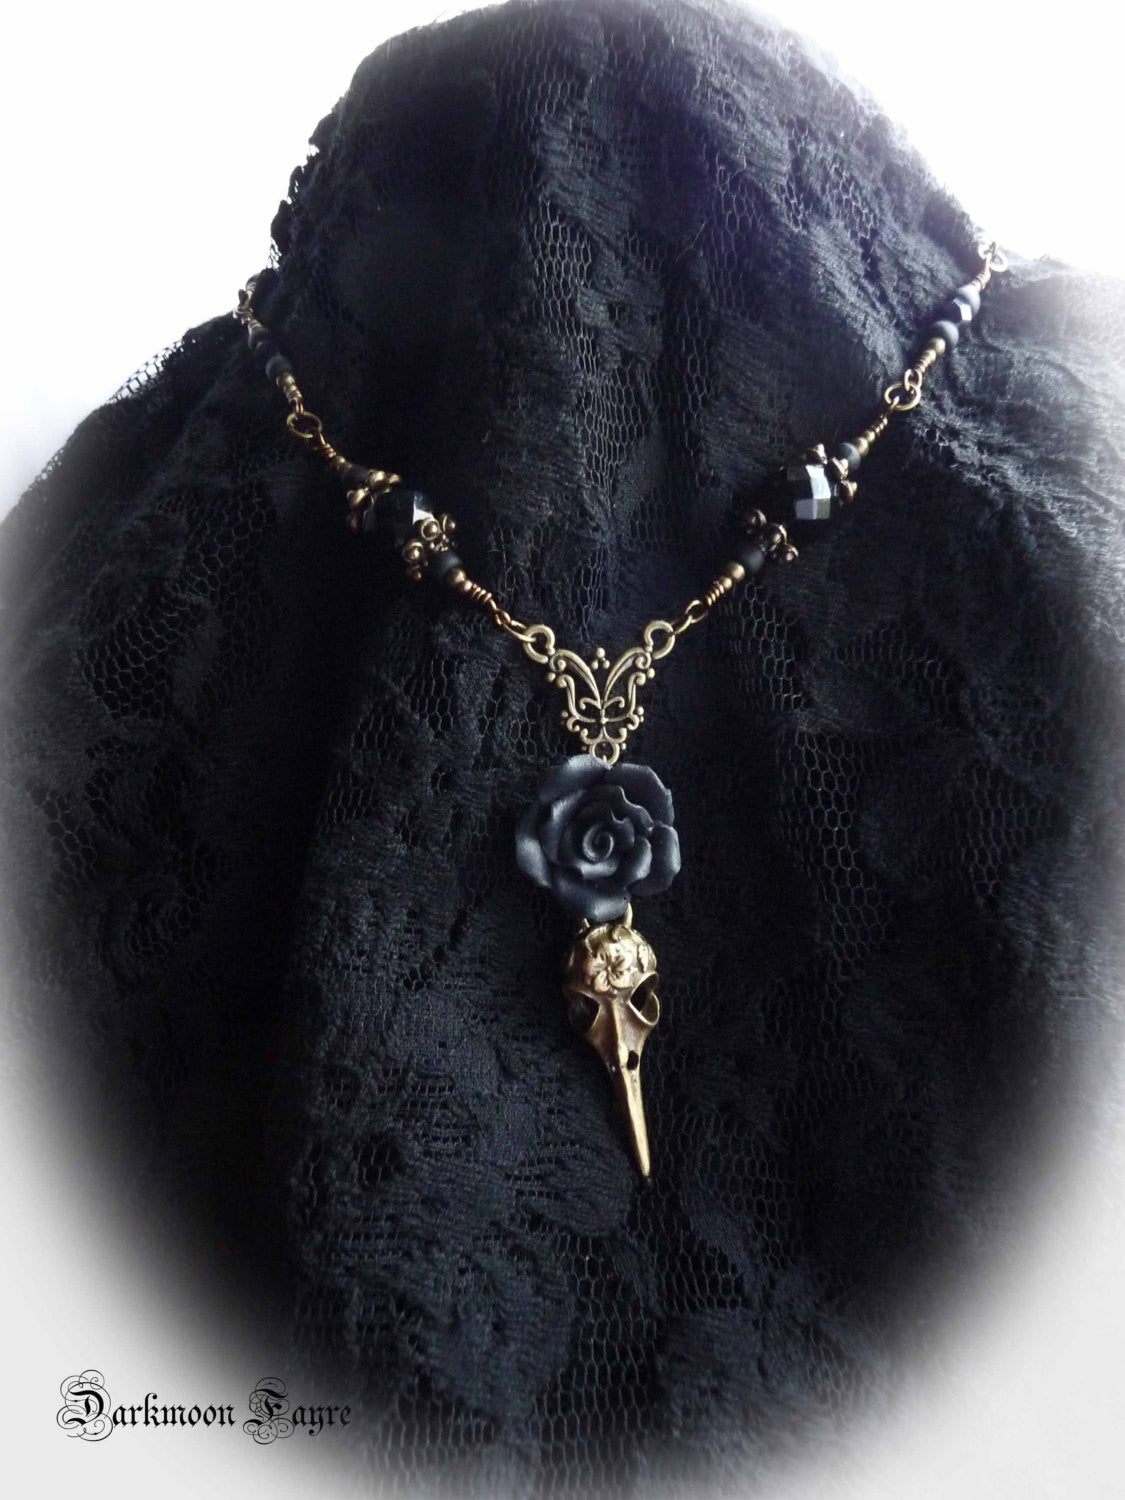 ***Black Rose & Tattooed Bronze Bird Skull Rosary Necklace/ Choker. Jet Black Faceted Vintage, Fire Polished and Matte Black Glass Beads - Darkmoon Fayre